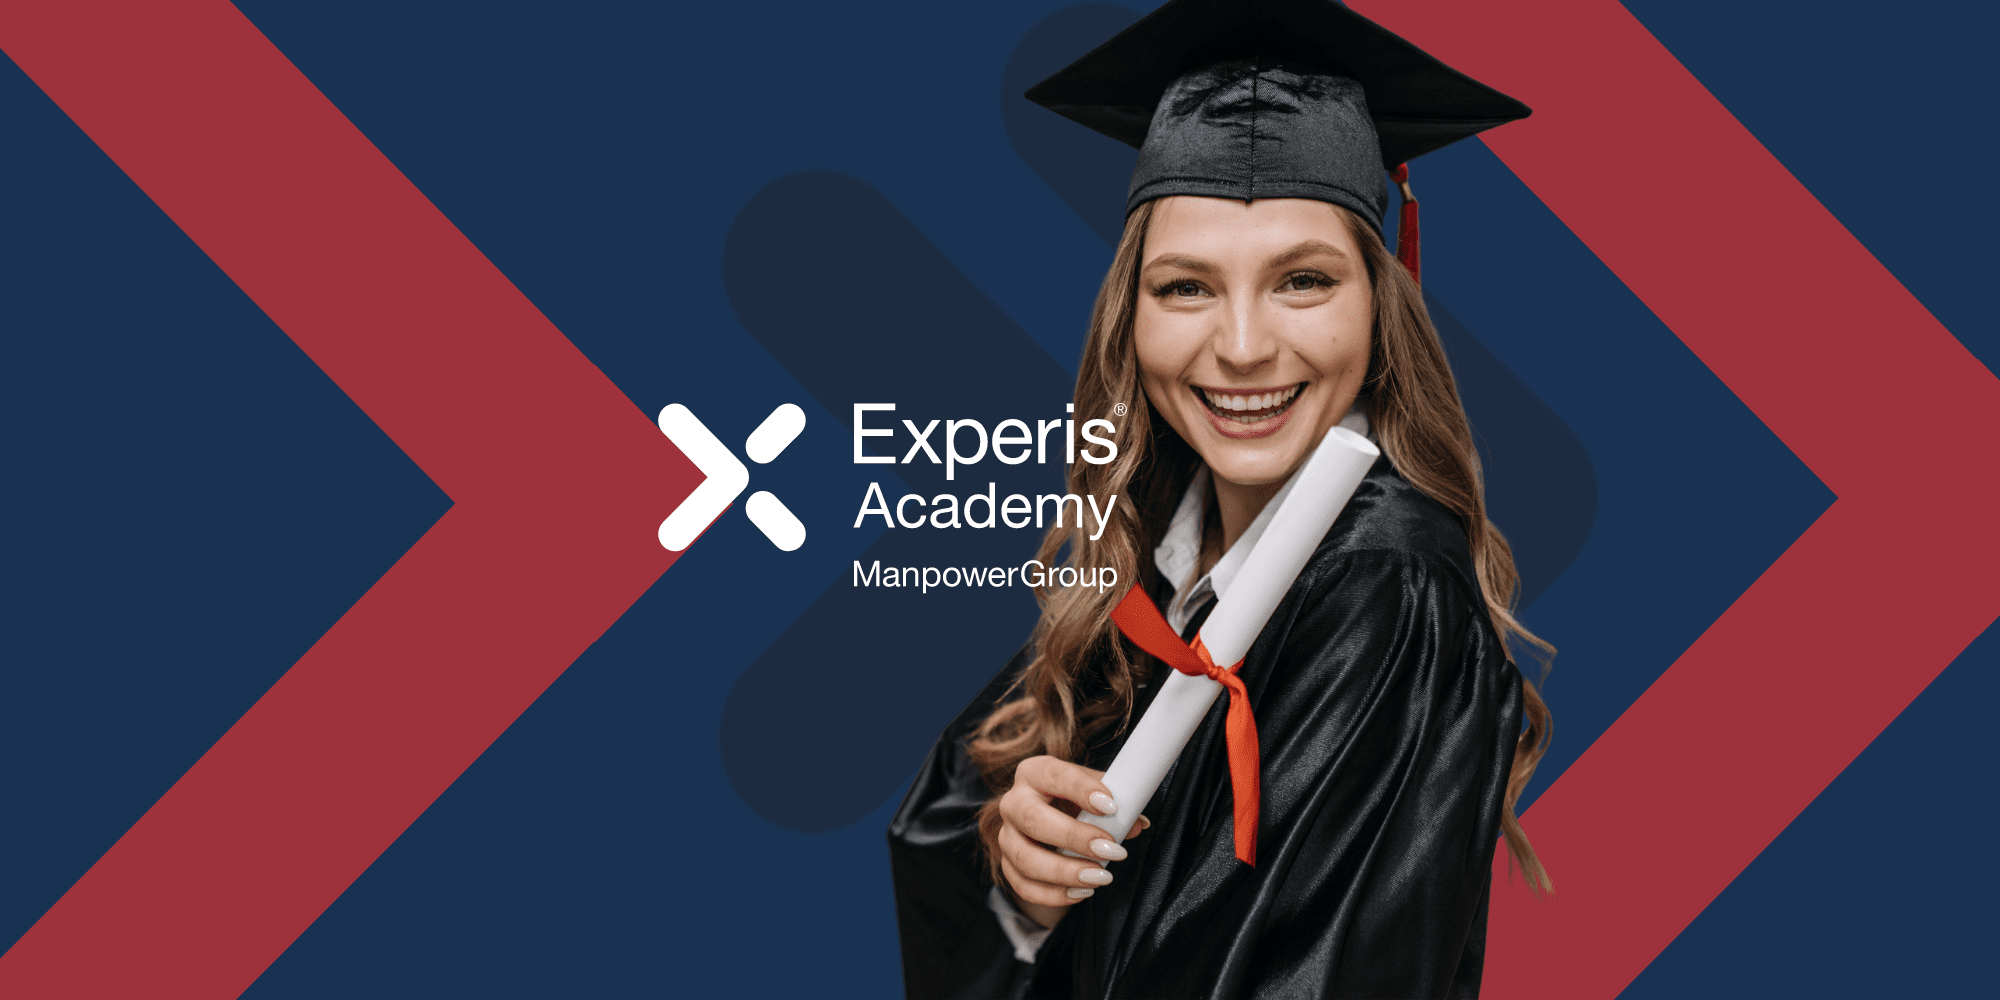 Experis Academy - IT Training Program in Switzerland for Companies